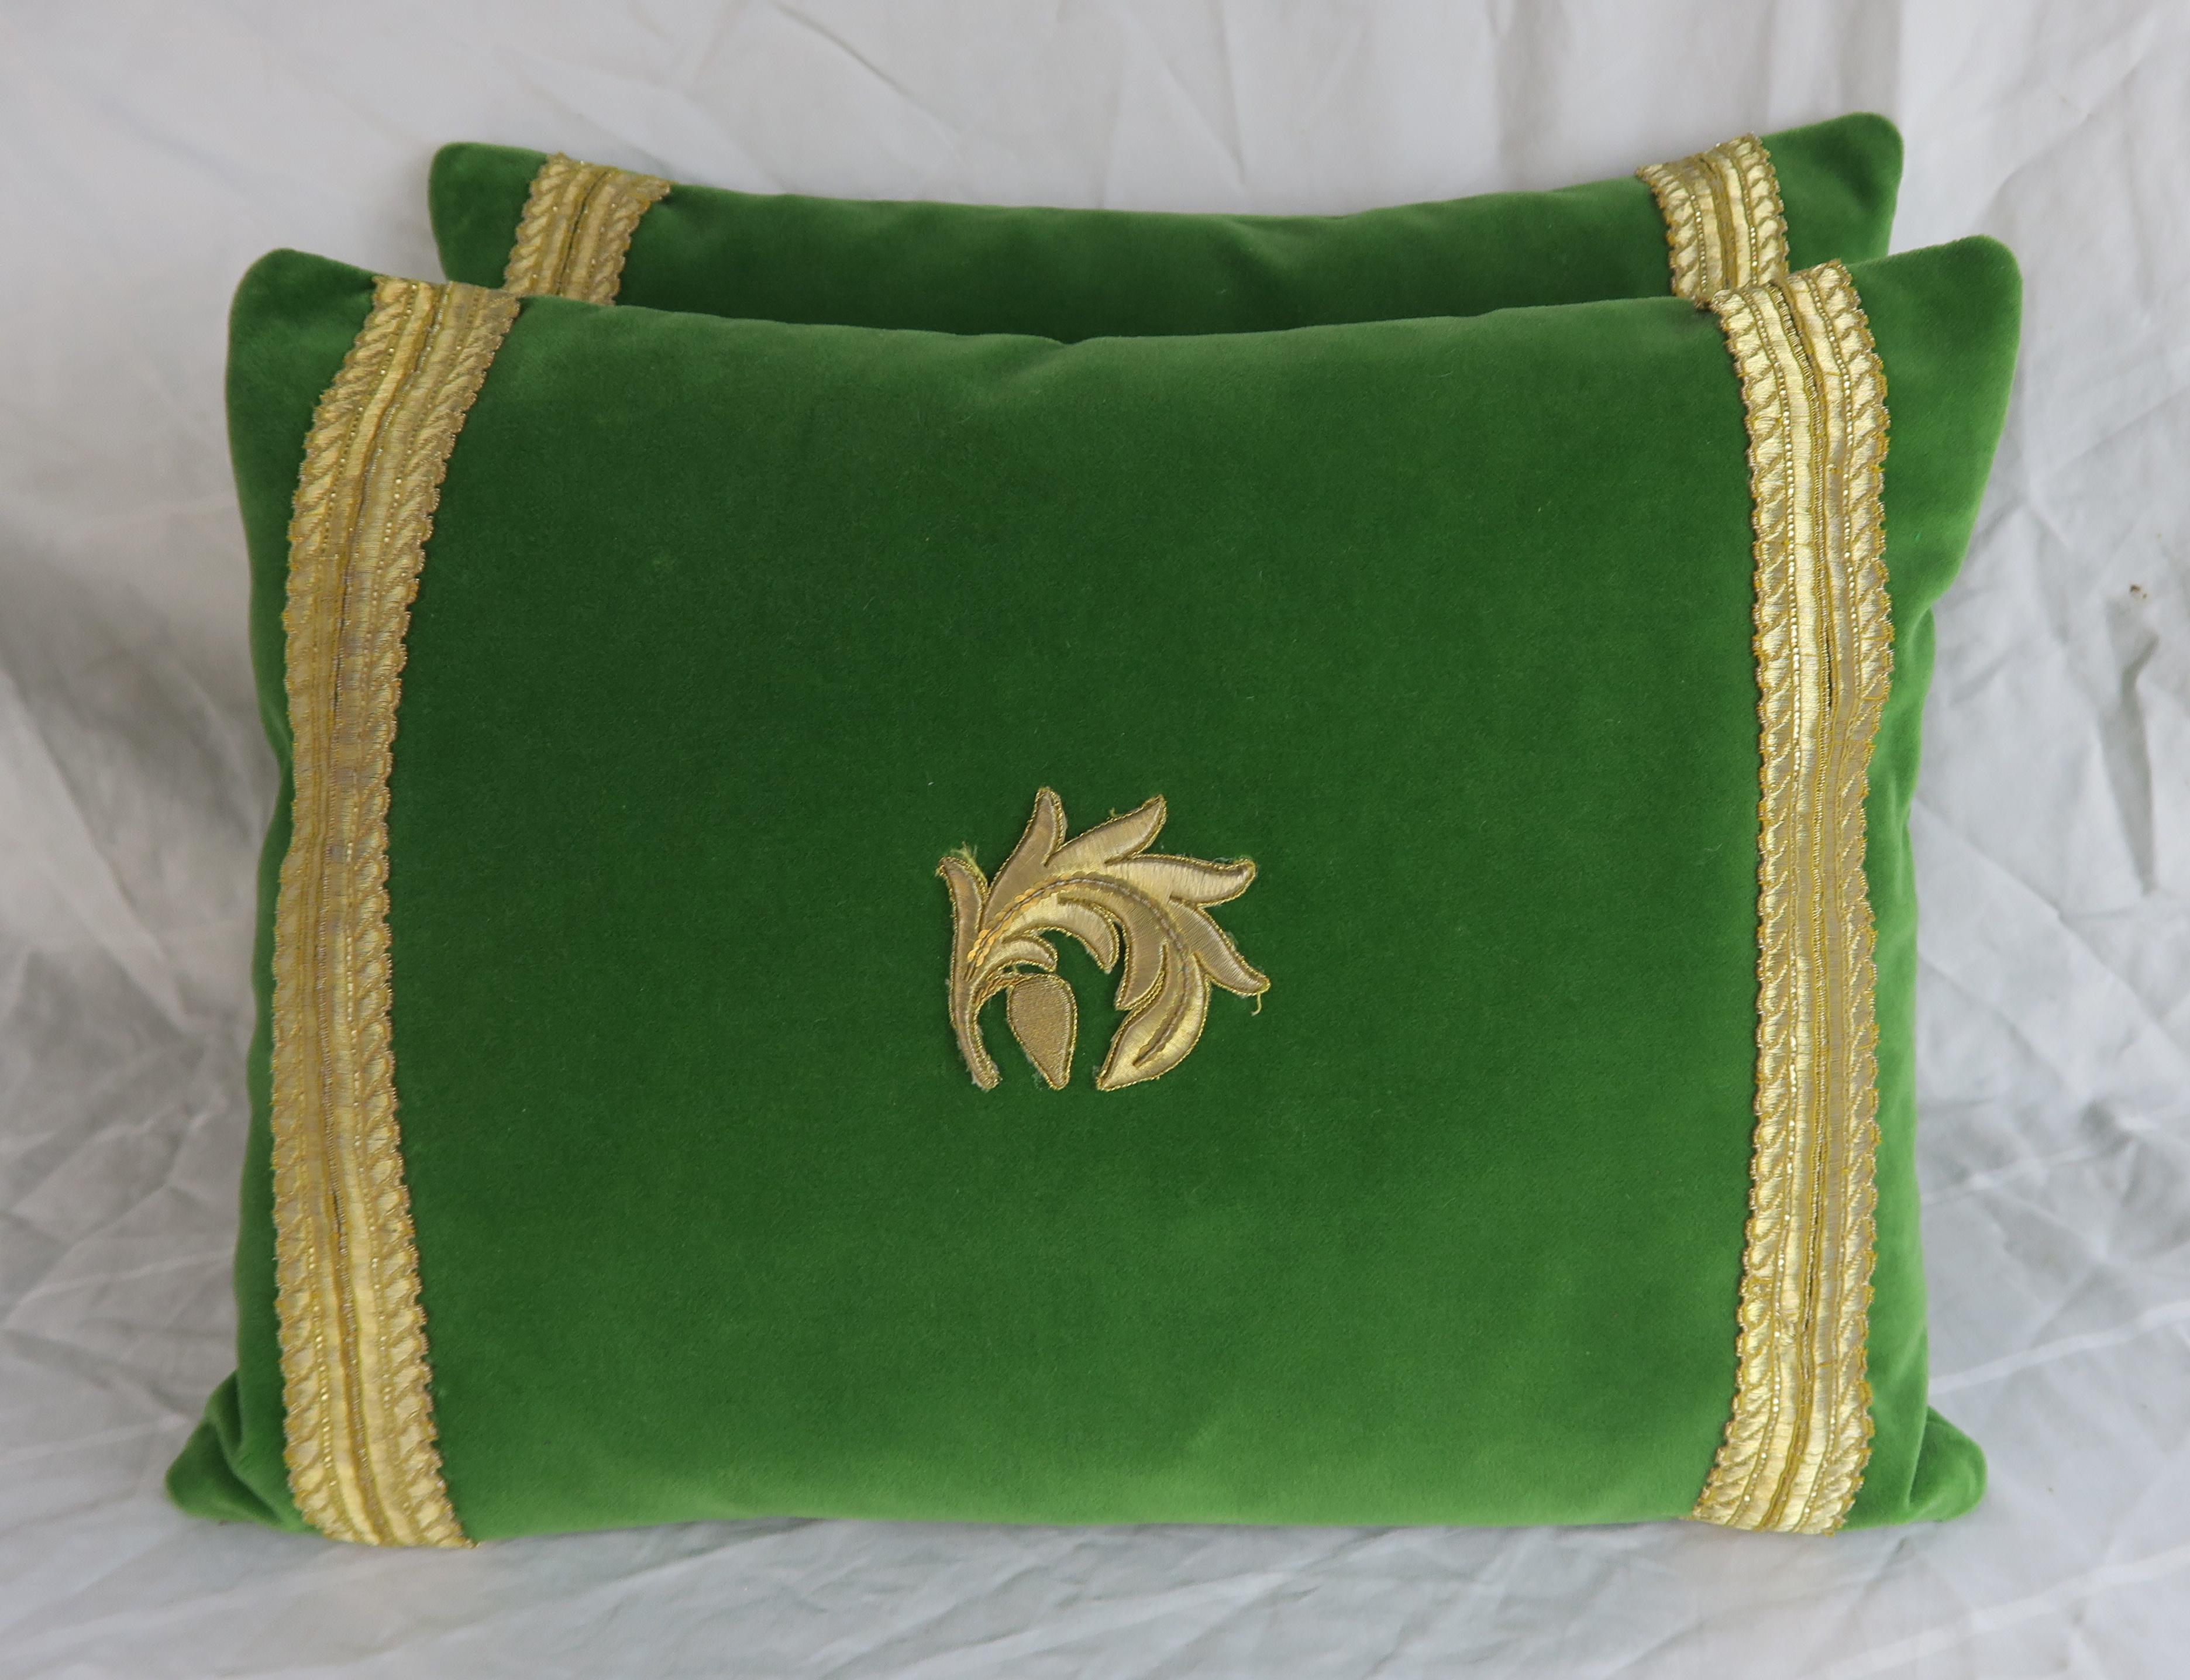 Pair of custom pillows made with metallic gold appliquéd silk velvet with gold metallic trim. Down inserts, zipper closures.